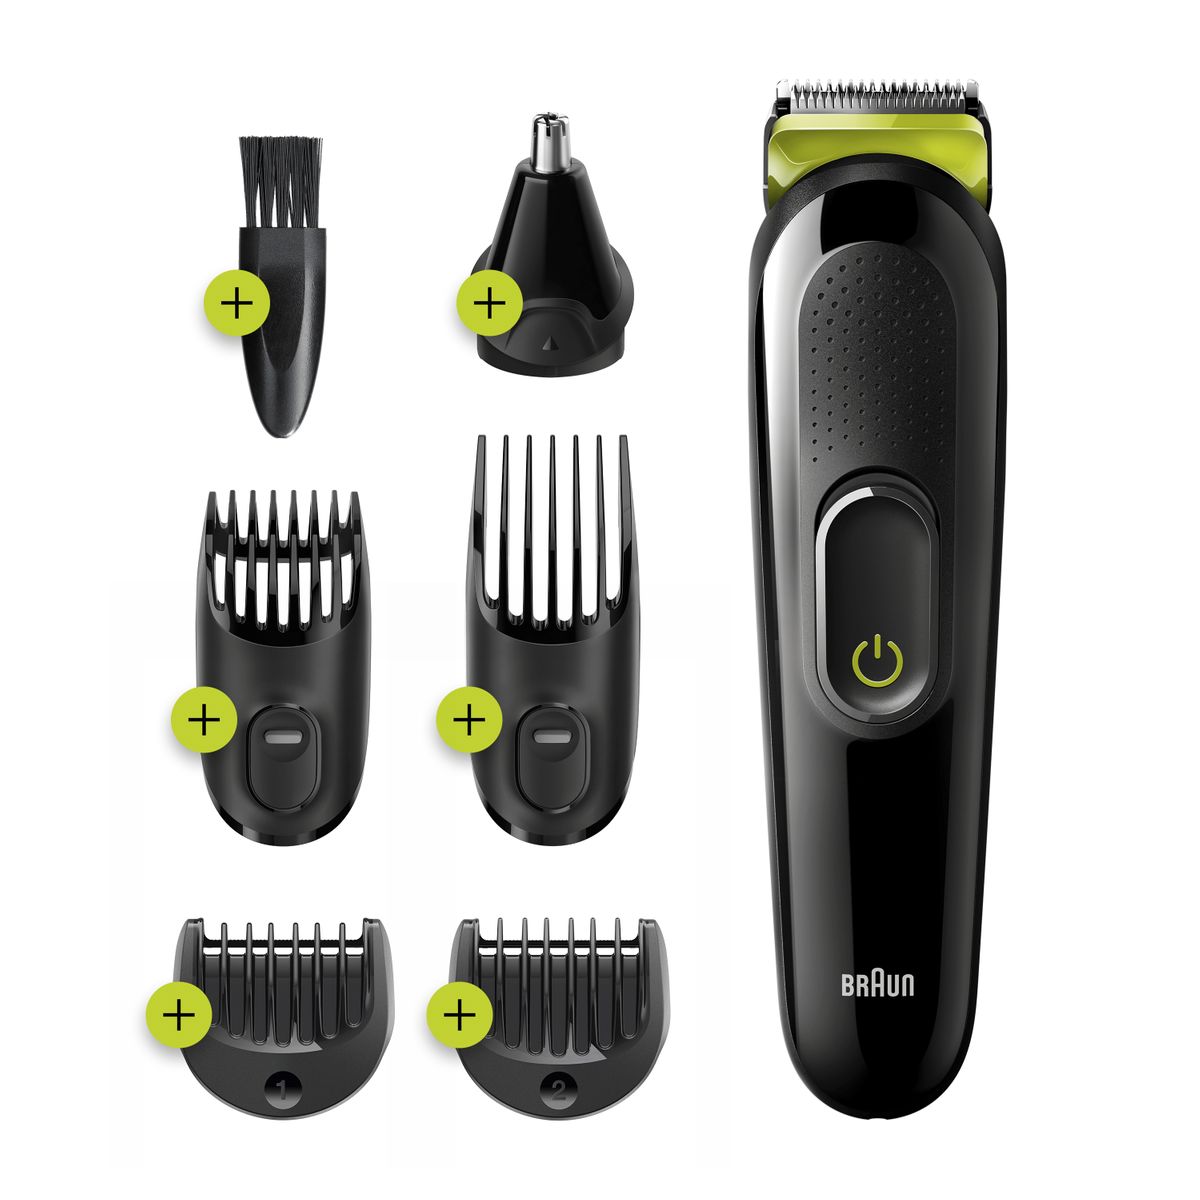 Braun beard trimmer/hair clipper men, trimmer/hair clipper & shaver, 6-in-1 set for beard, face, head hair, ears and nose, MGK3221, black/green Black/Green Single